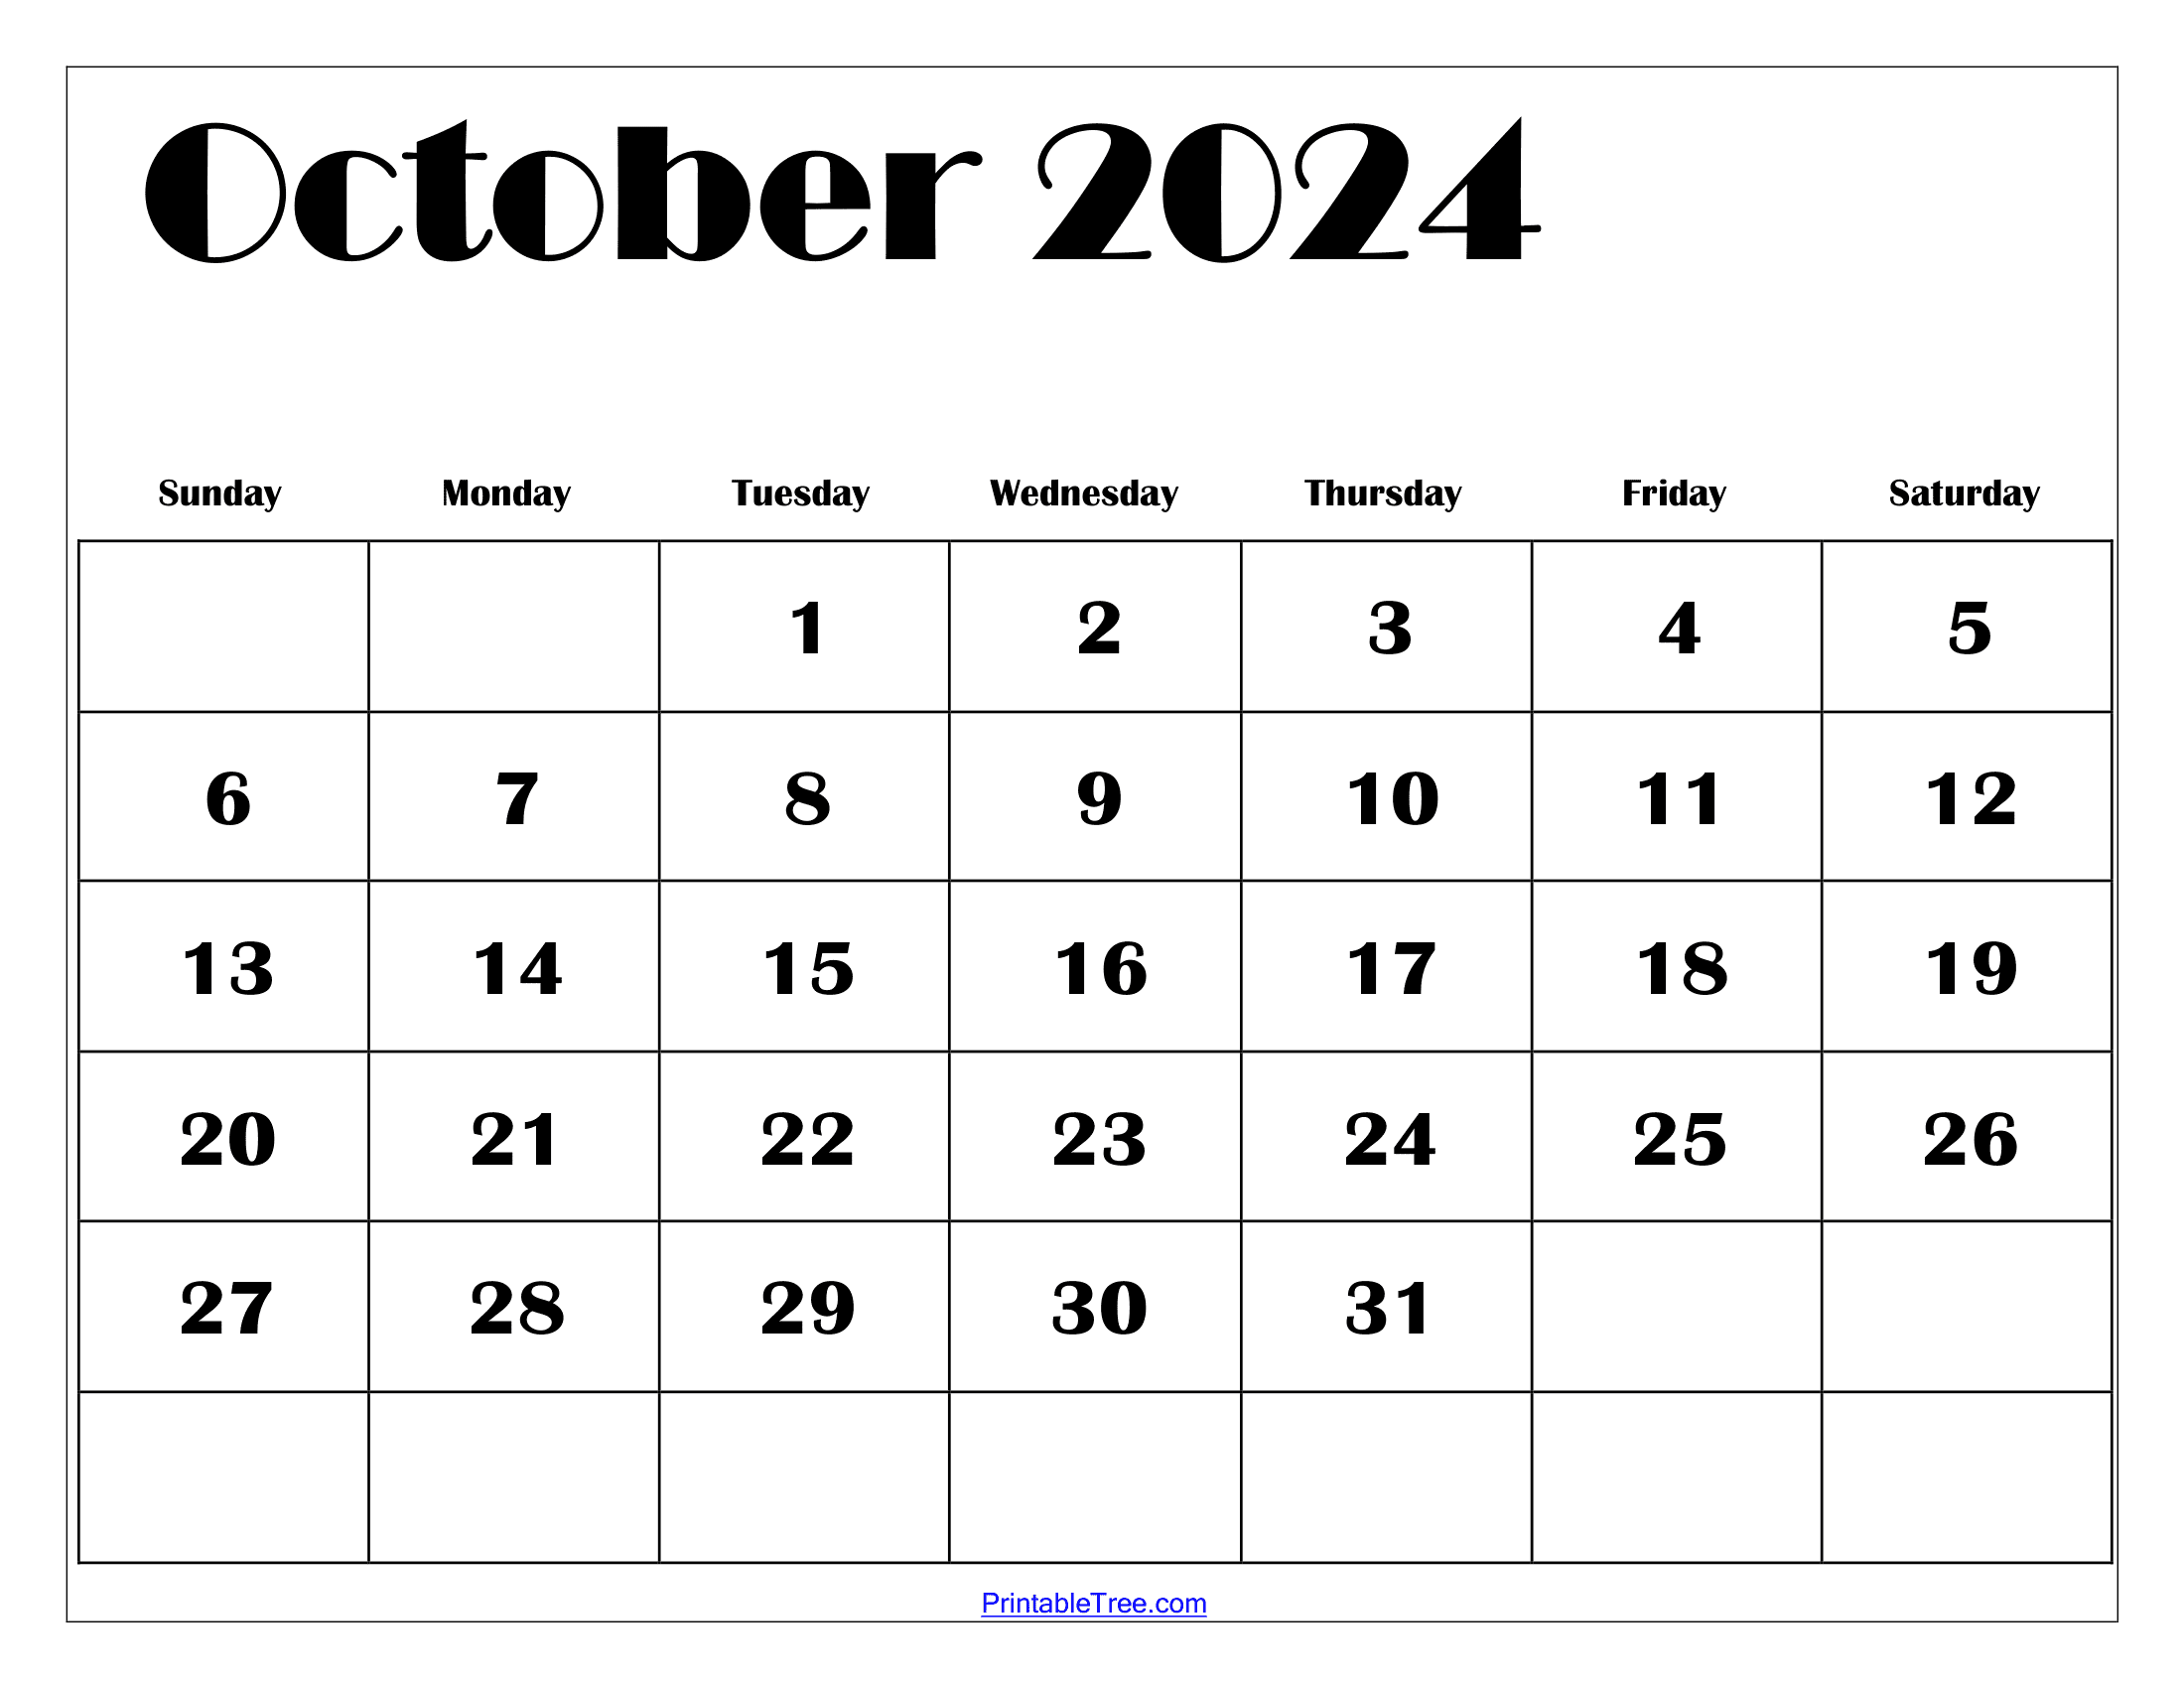 October 2024 Calendar Printable Pdf Free Templates With Holidays for Free Printable October 2024 Calendar